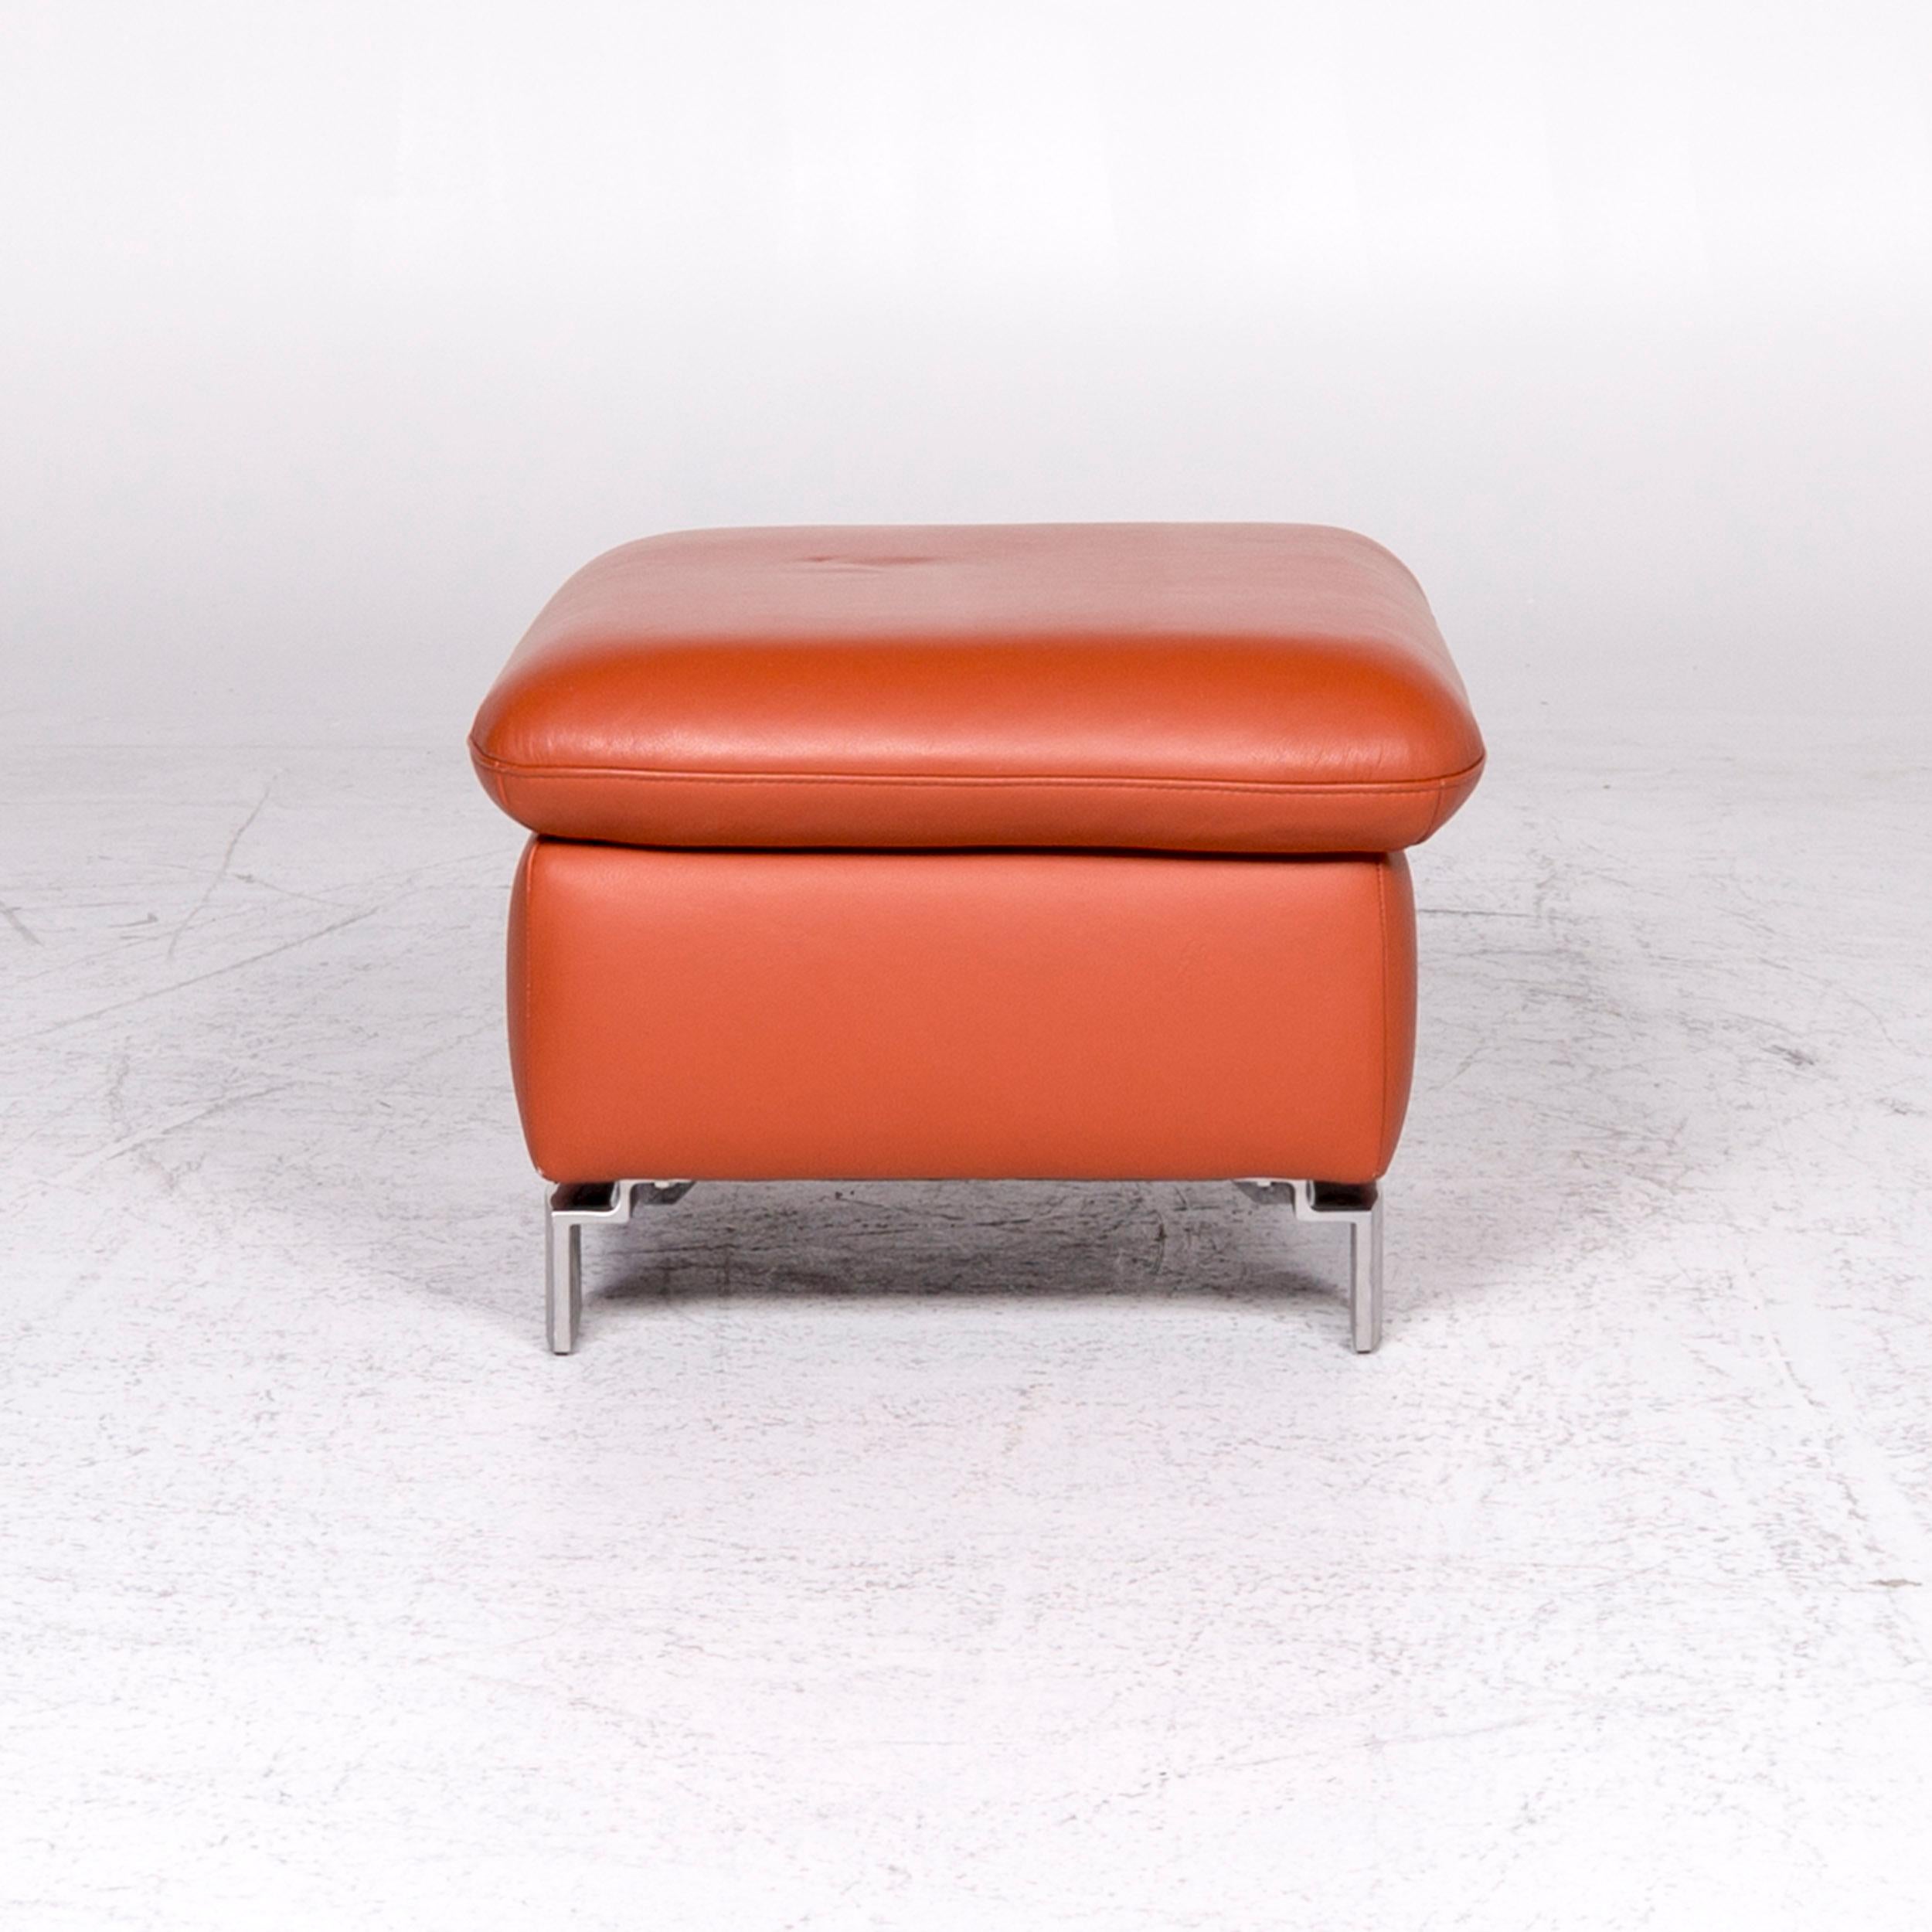 Contemporary Ewald Schillig Designer Leather Stool Orange Function Storage Space